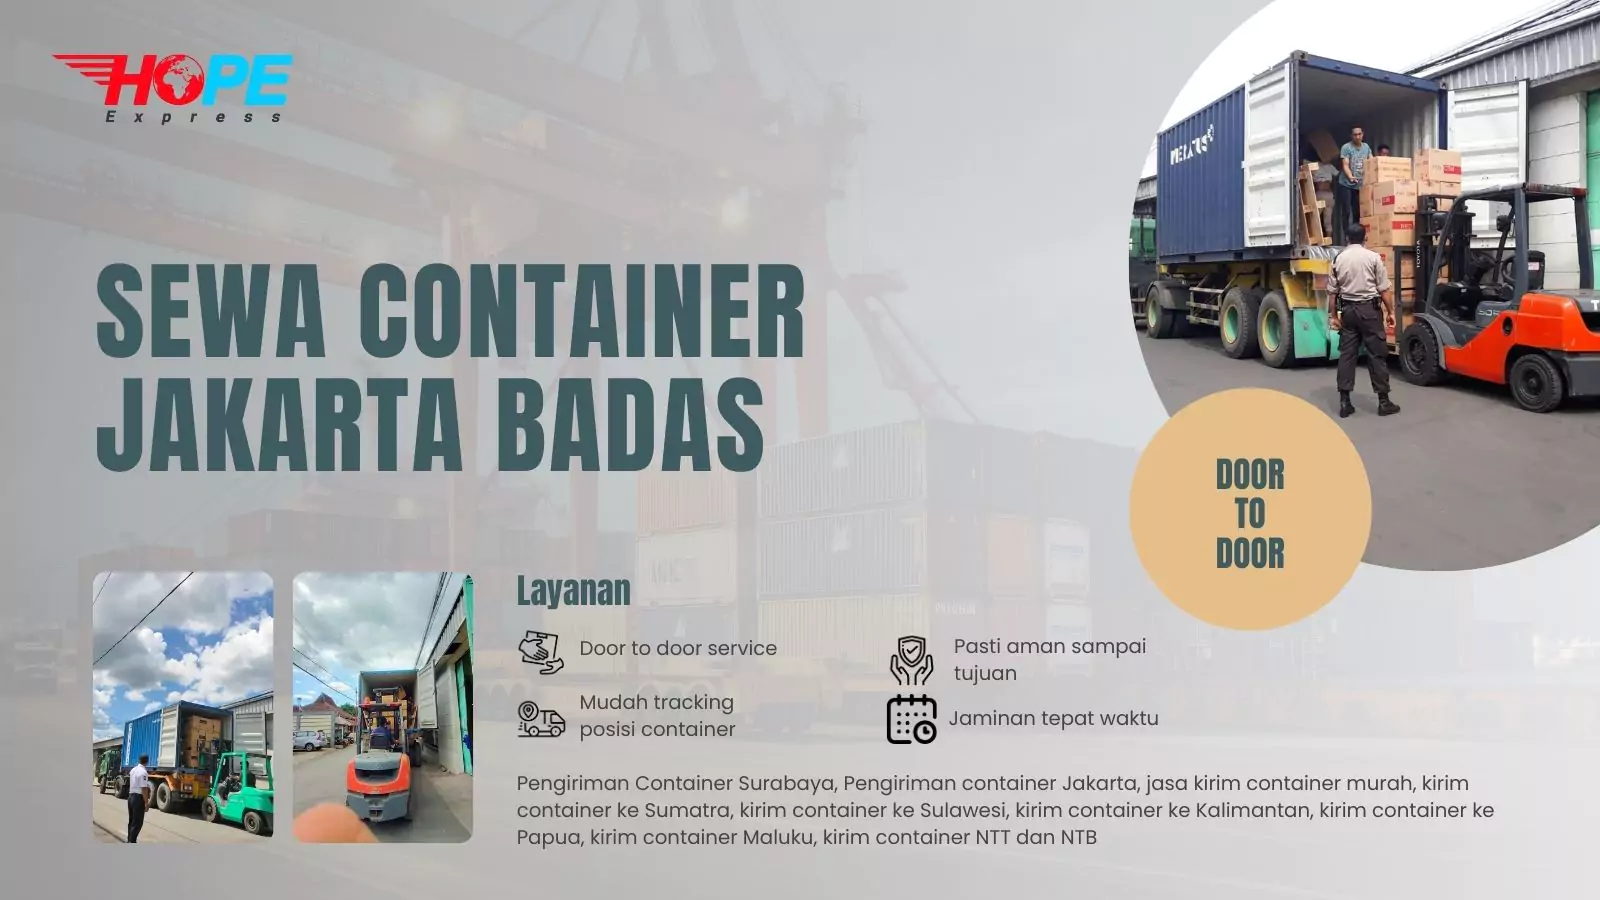 Sewa Container Jakarta Badas